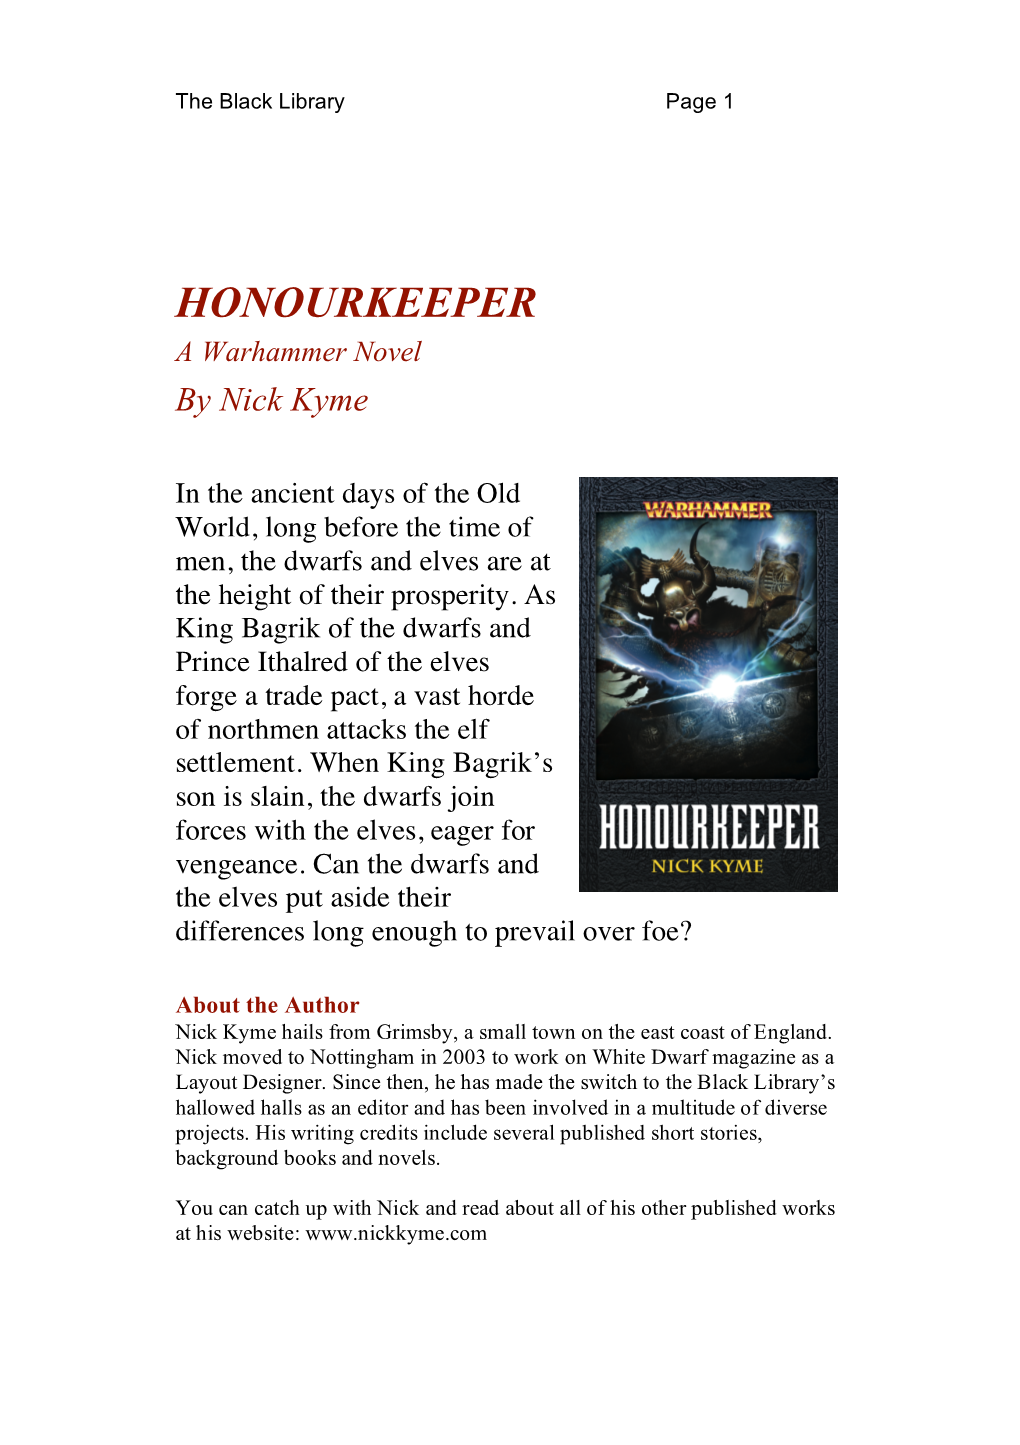 HONOURKEEPER a Warhammer Novel by Nick Kyme